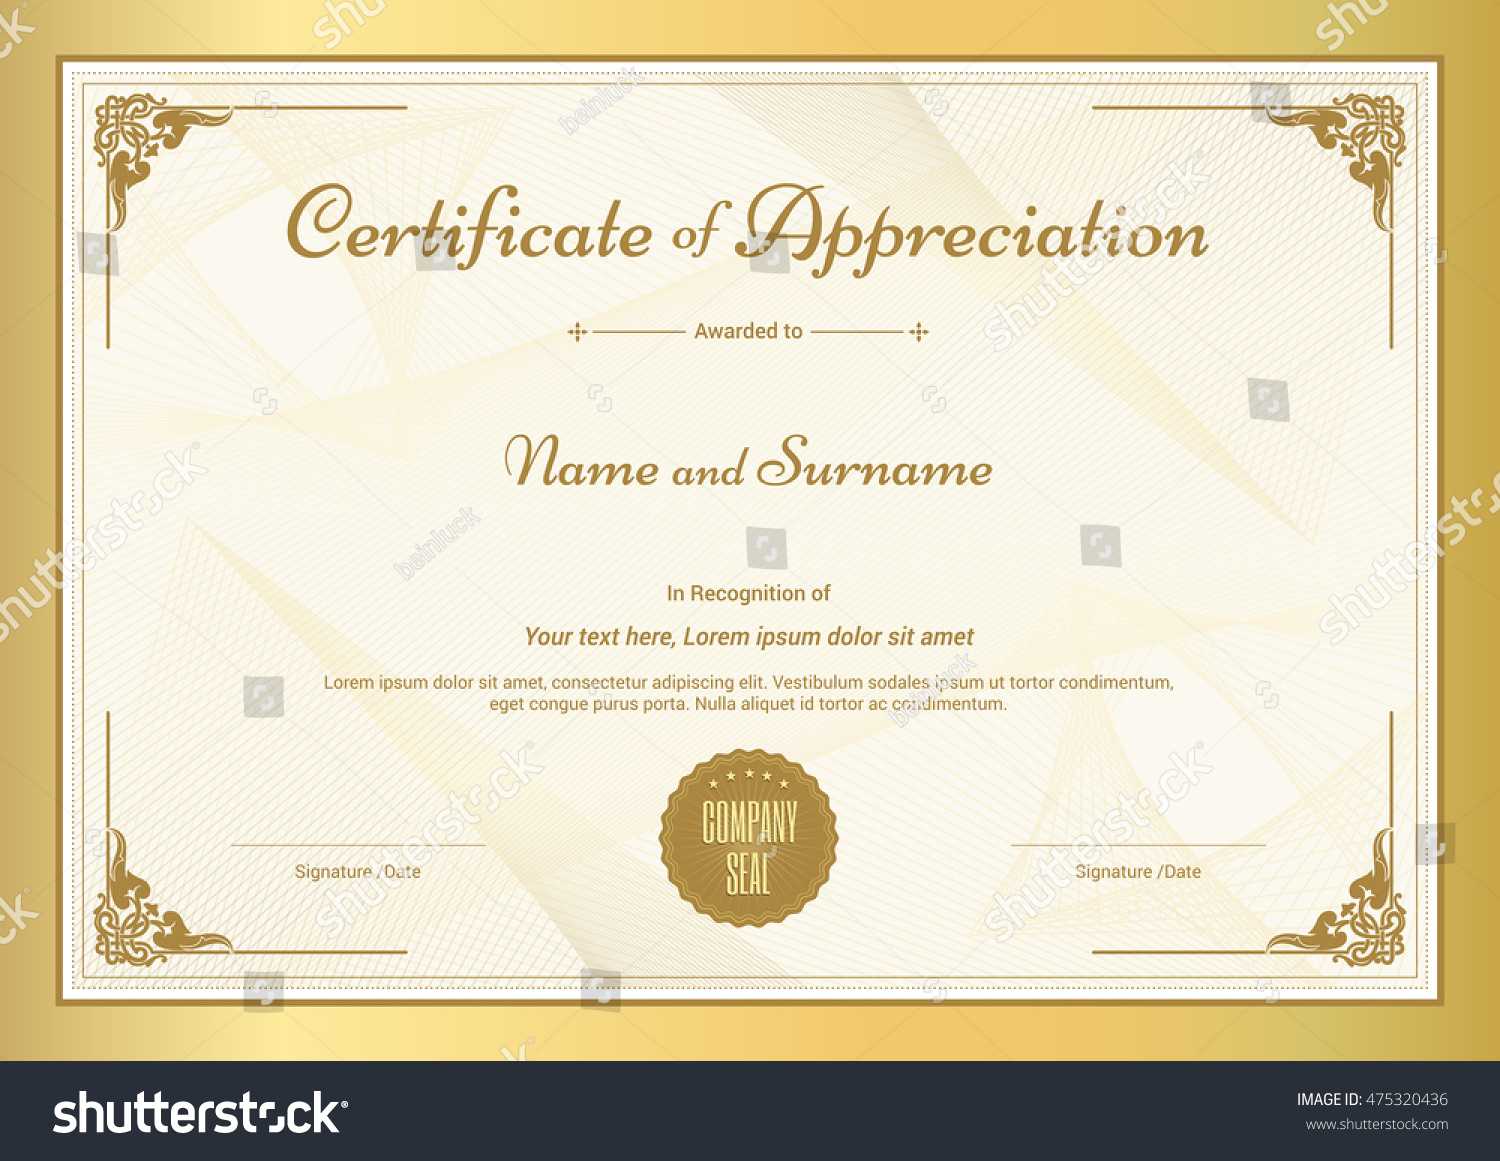 Stock Vector Certificate Of Appreciation Template With Intended For Certificate Of Appreciation Template Doc